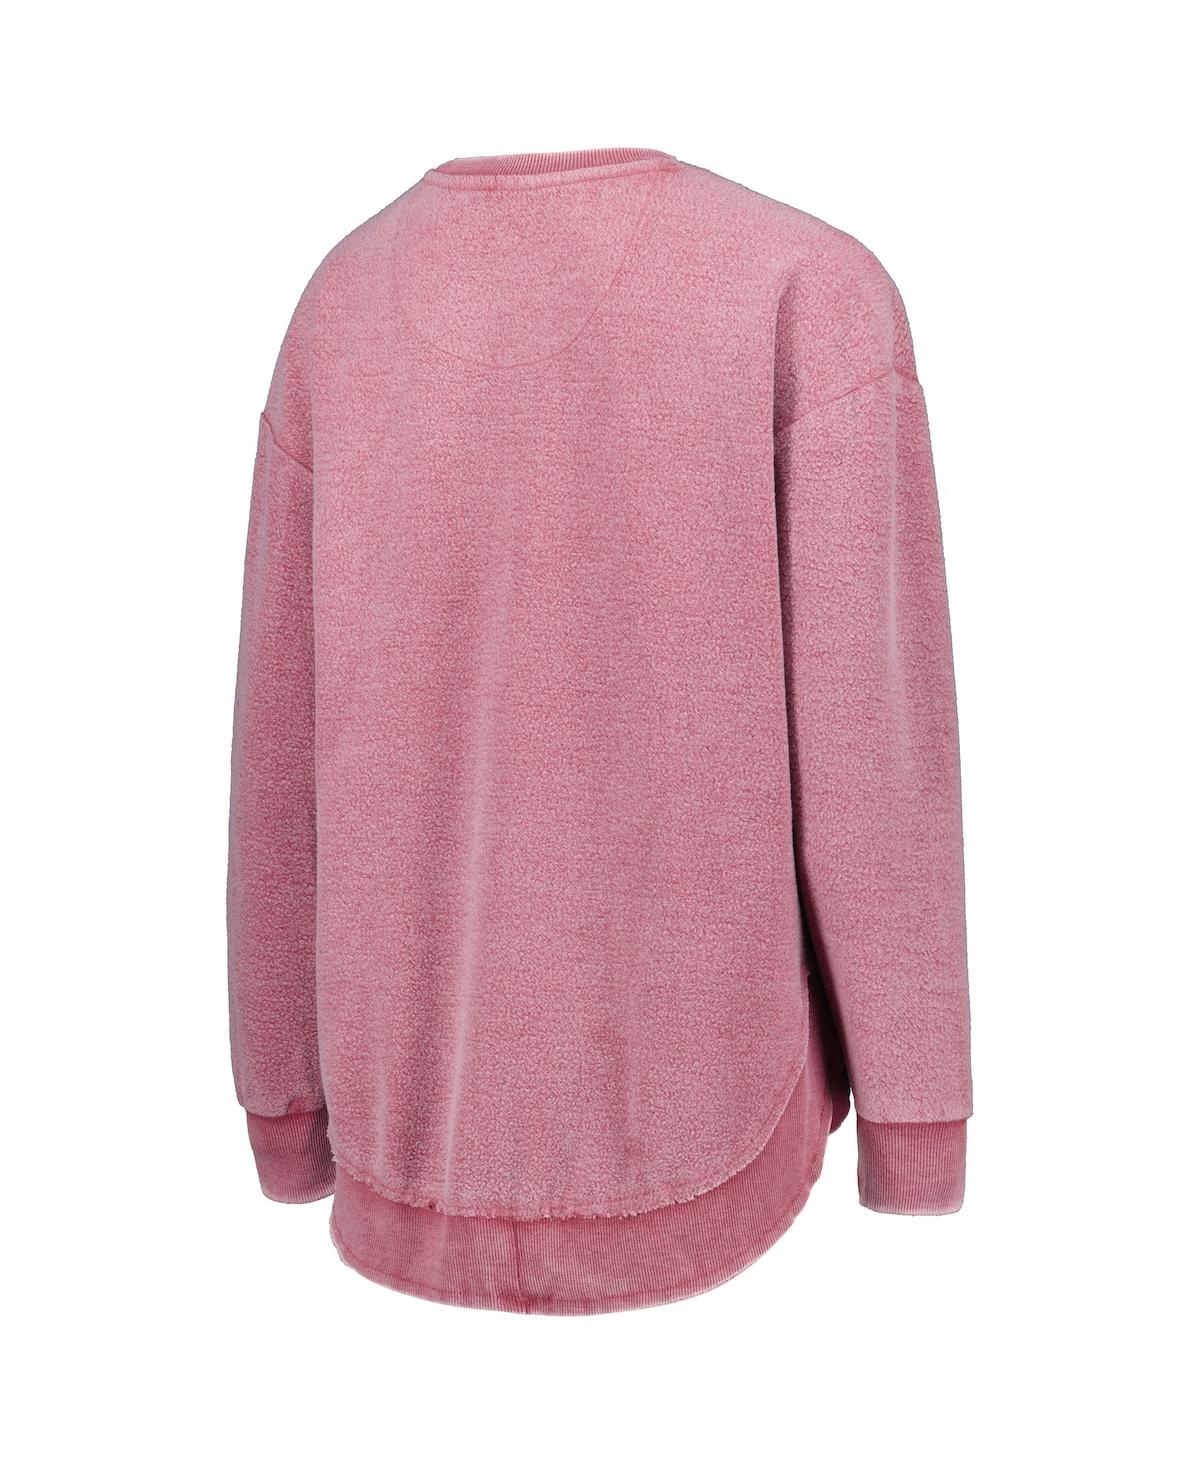 Shop Pressbox Women's  Crimson Distressed Washington State Cougars Ponchoville Pullover Sweatshirt